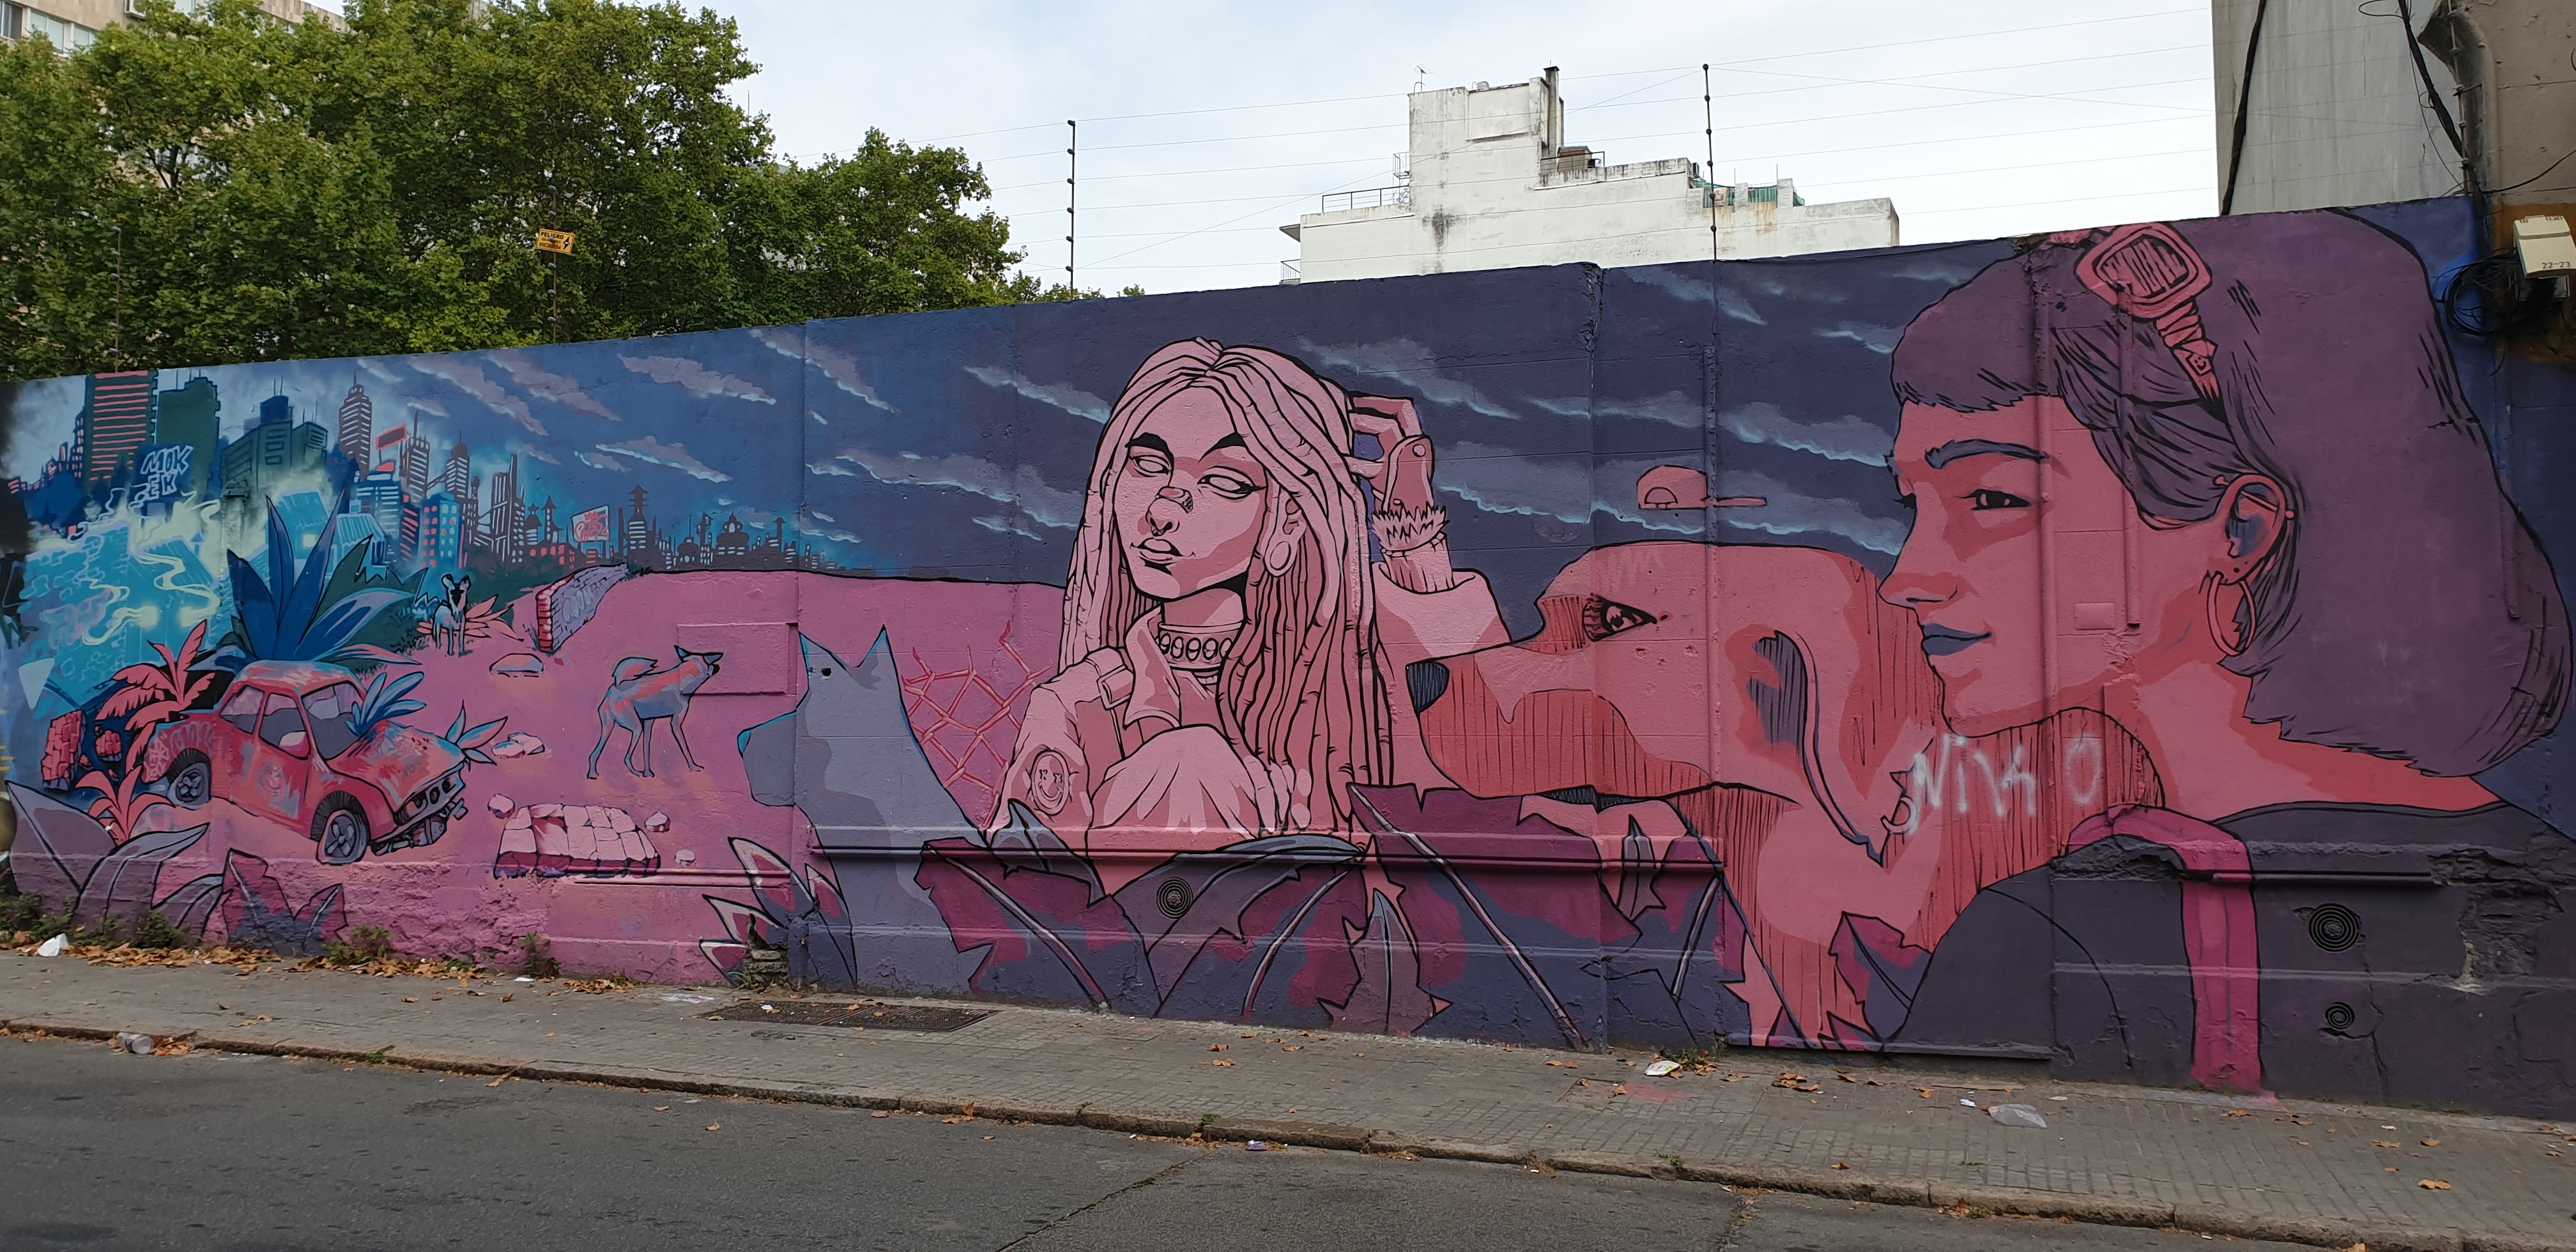 Mur réalisé par Pardos , Ganga Positive - Montevideo - Uruguay 2020 - ©nofakeinmynews.com